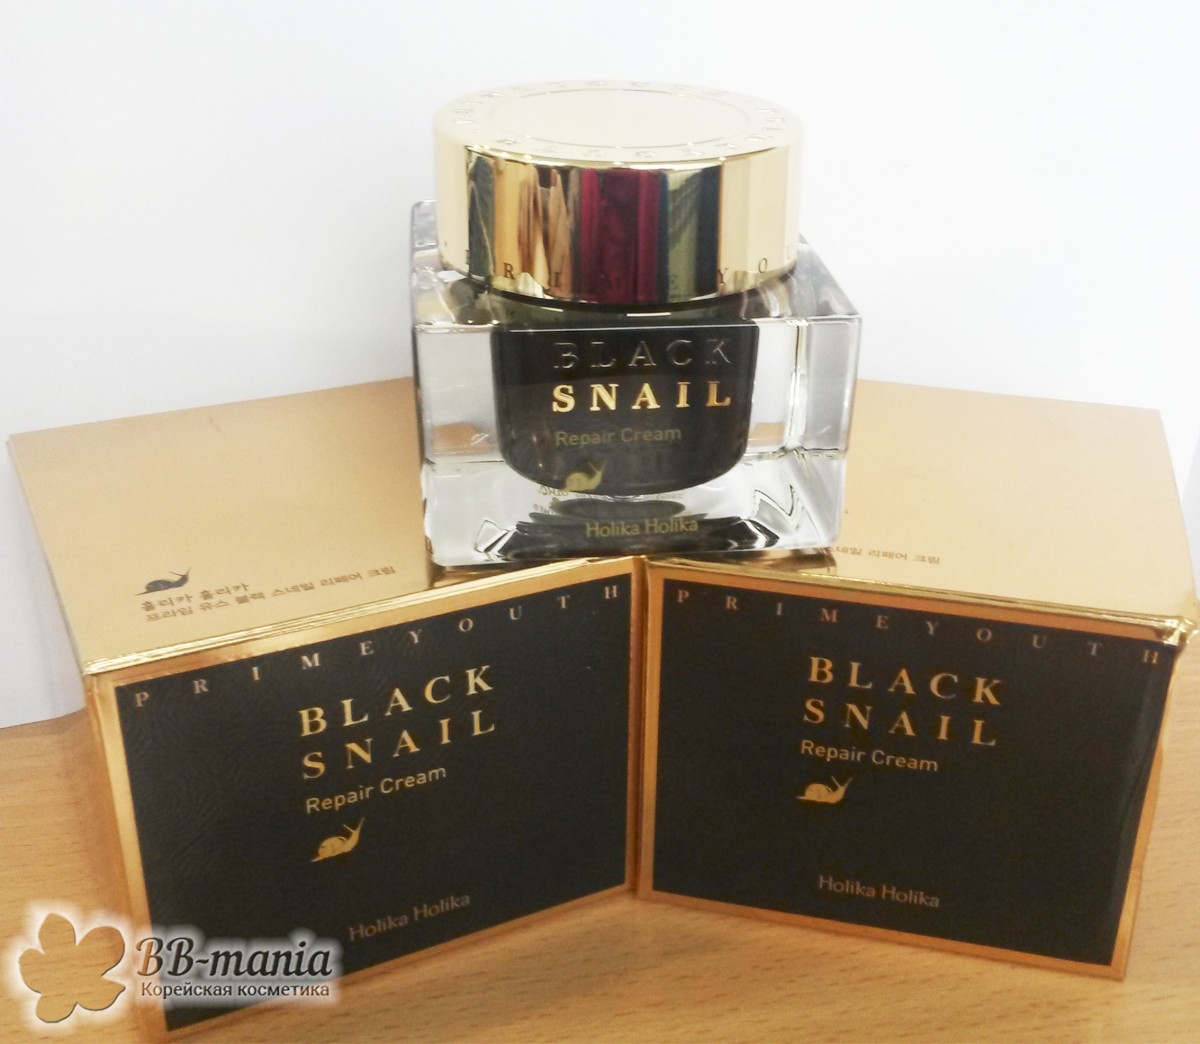 Prime Youth Black Snail Repair Cream [Holika Holika]